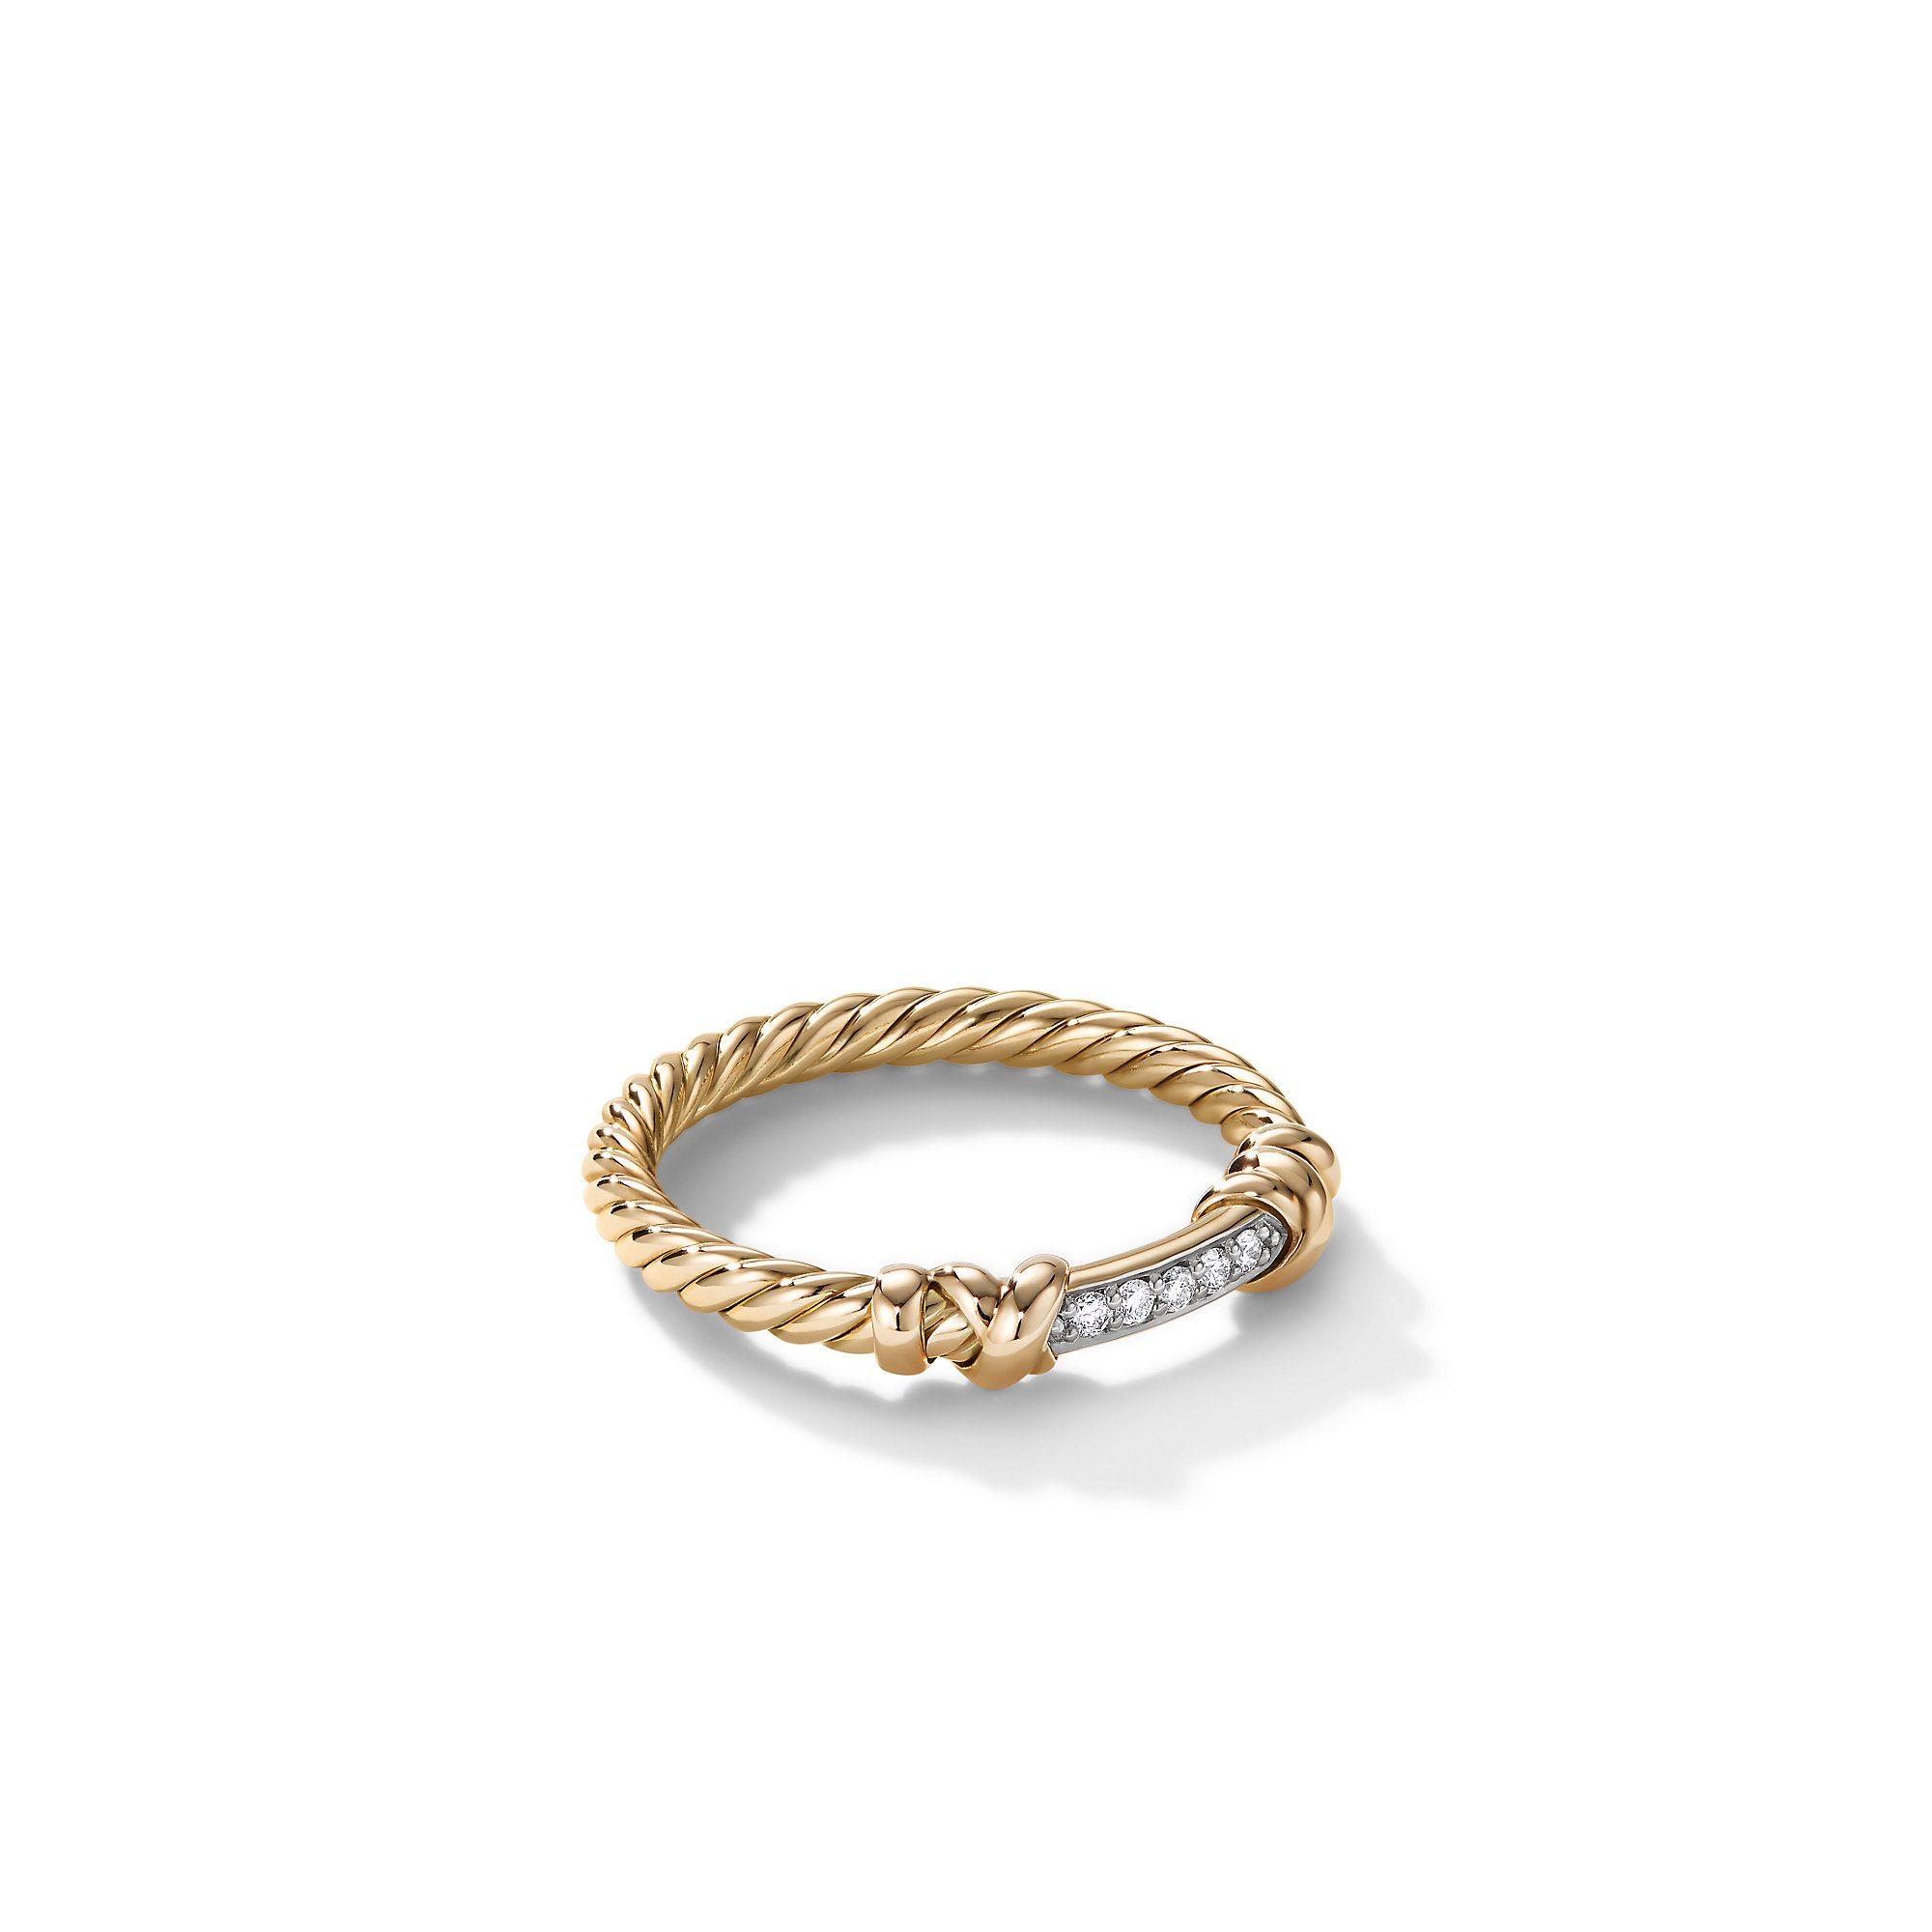 David Yurman Petite Helena Wrap Ring in 18k Yellow Gold with Diamonds, size 6